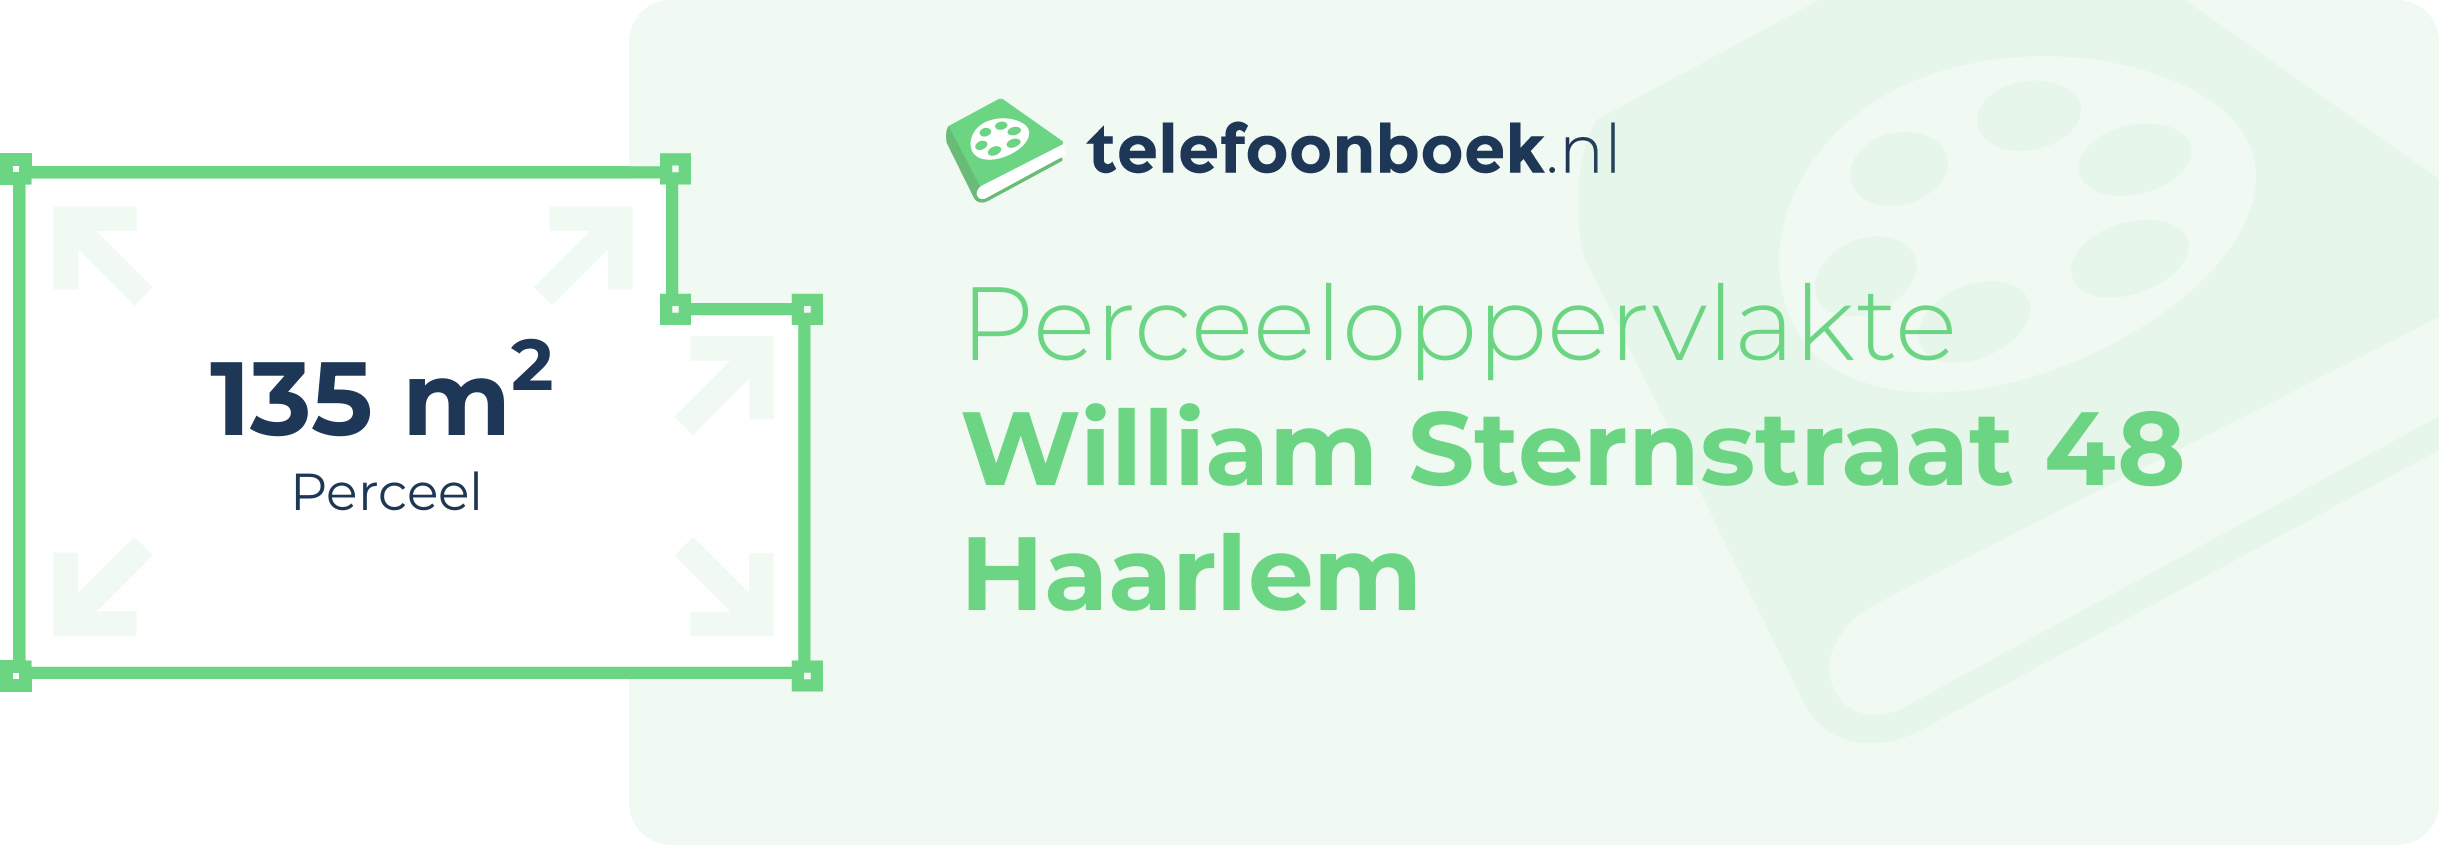 Perceeloppervlakte William Sternstraat 48 Haarlem